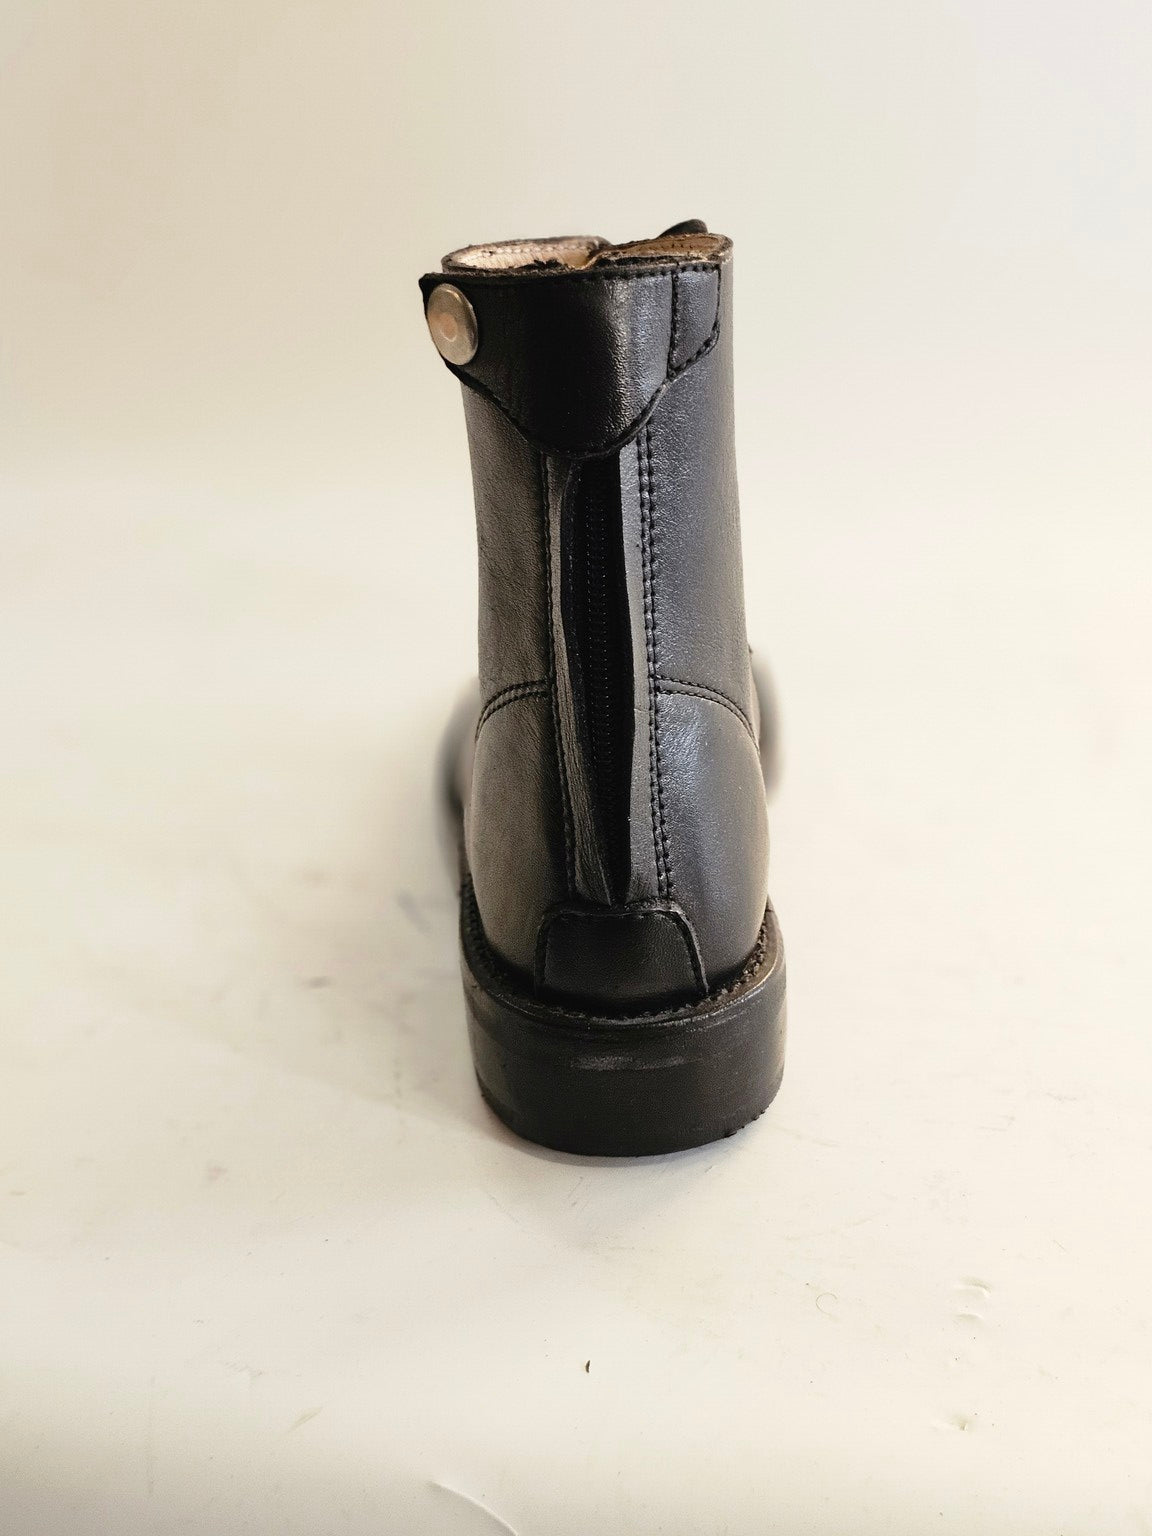 Shangu Jodhpur Boot - Hello Quality Collection